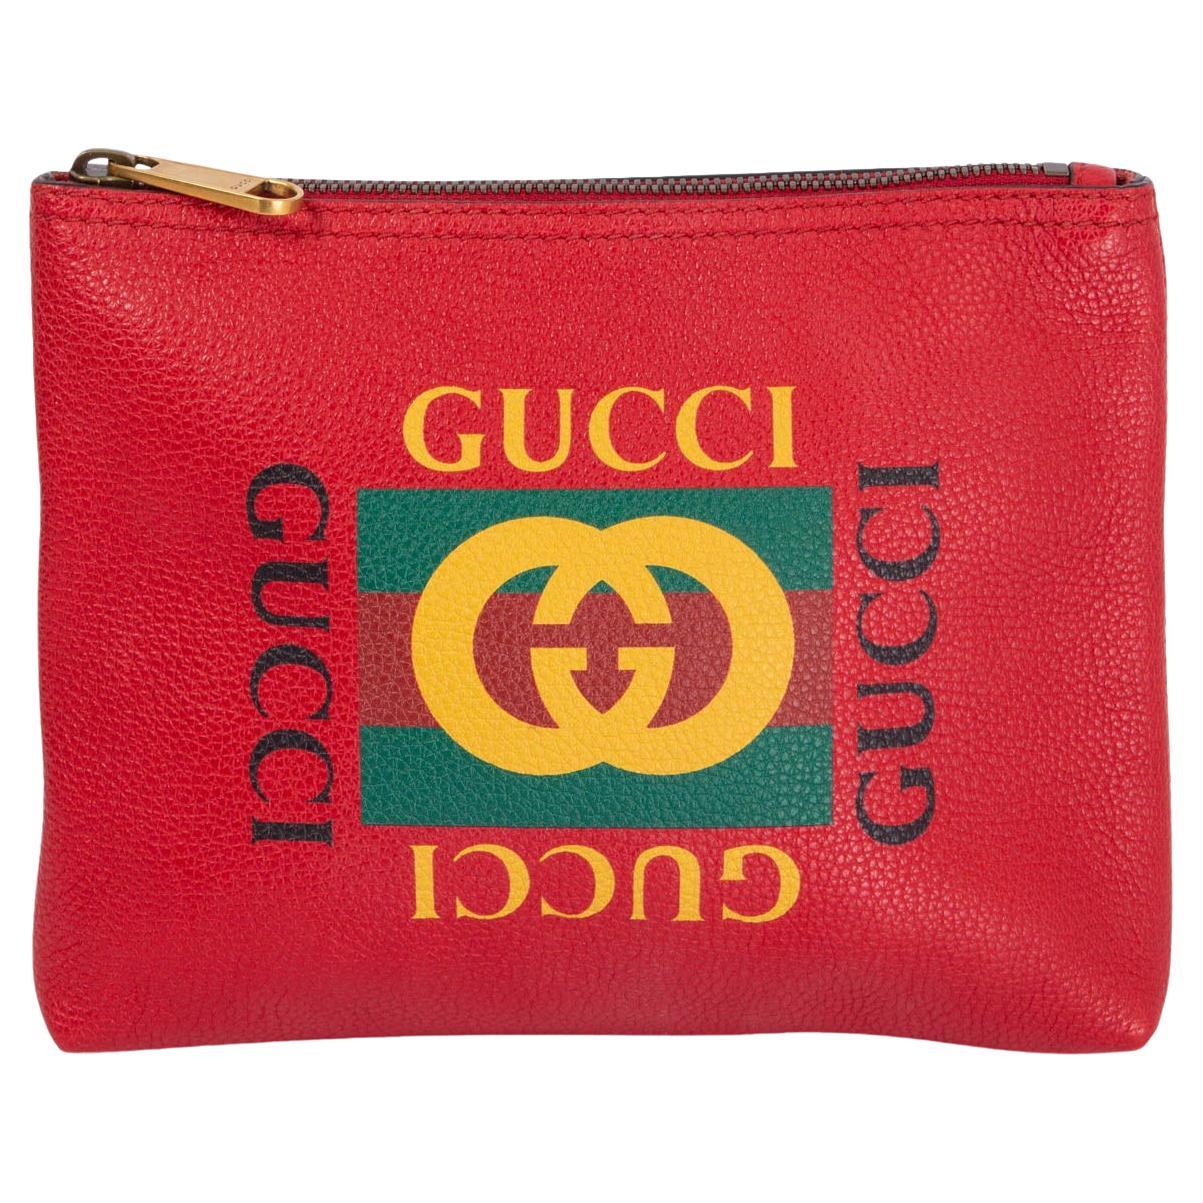 GUCCI red leather 2018 LOGO SMALL PORTFOLIO Pouch Bag